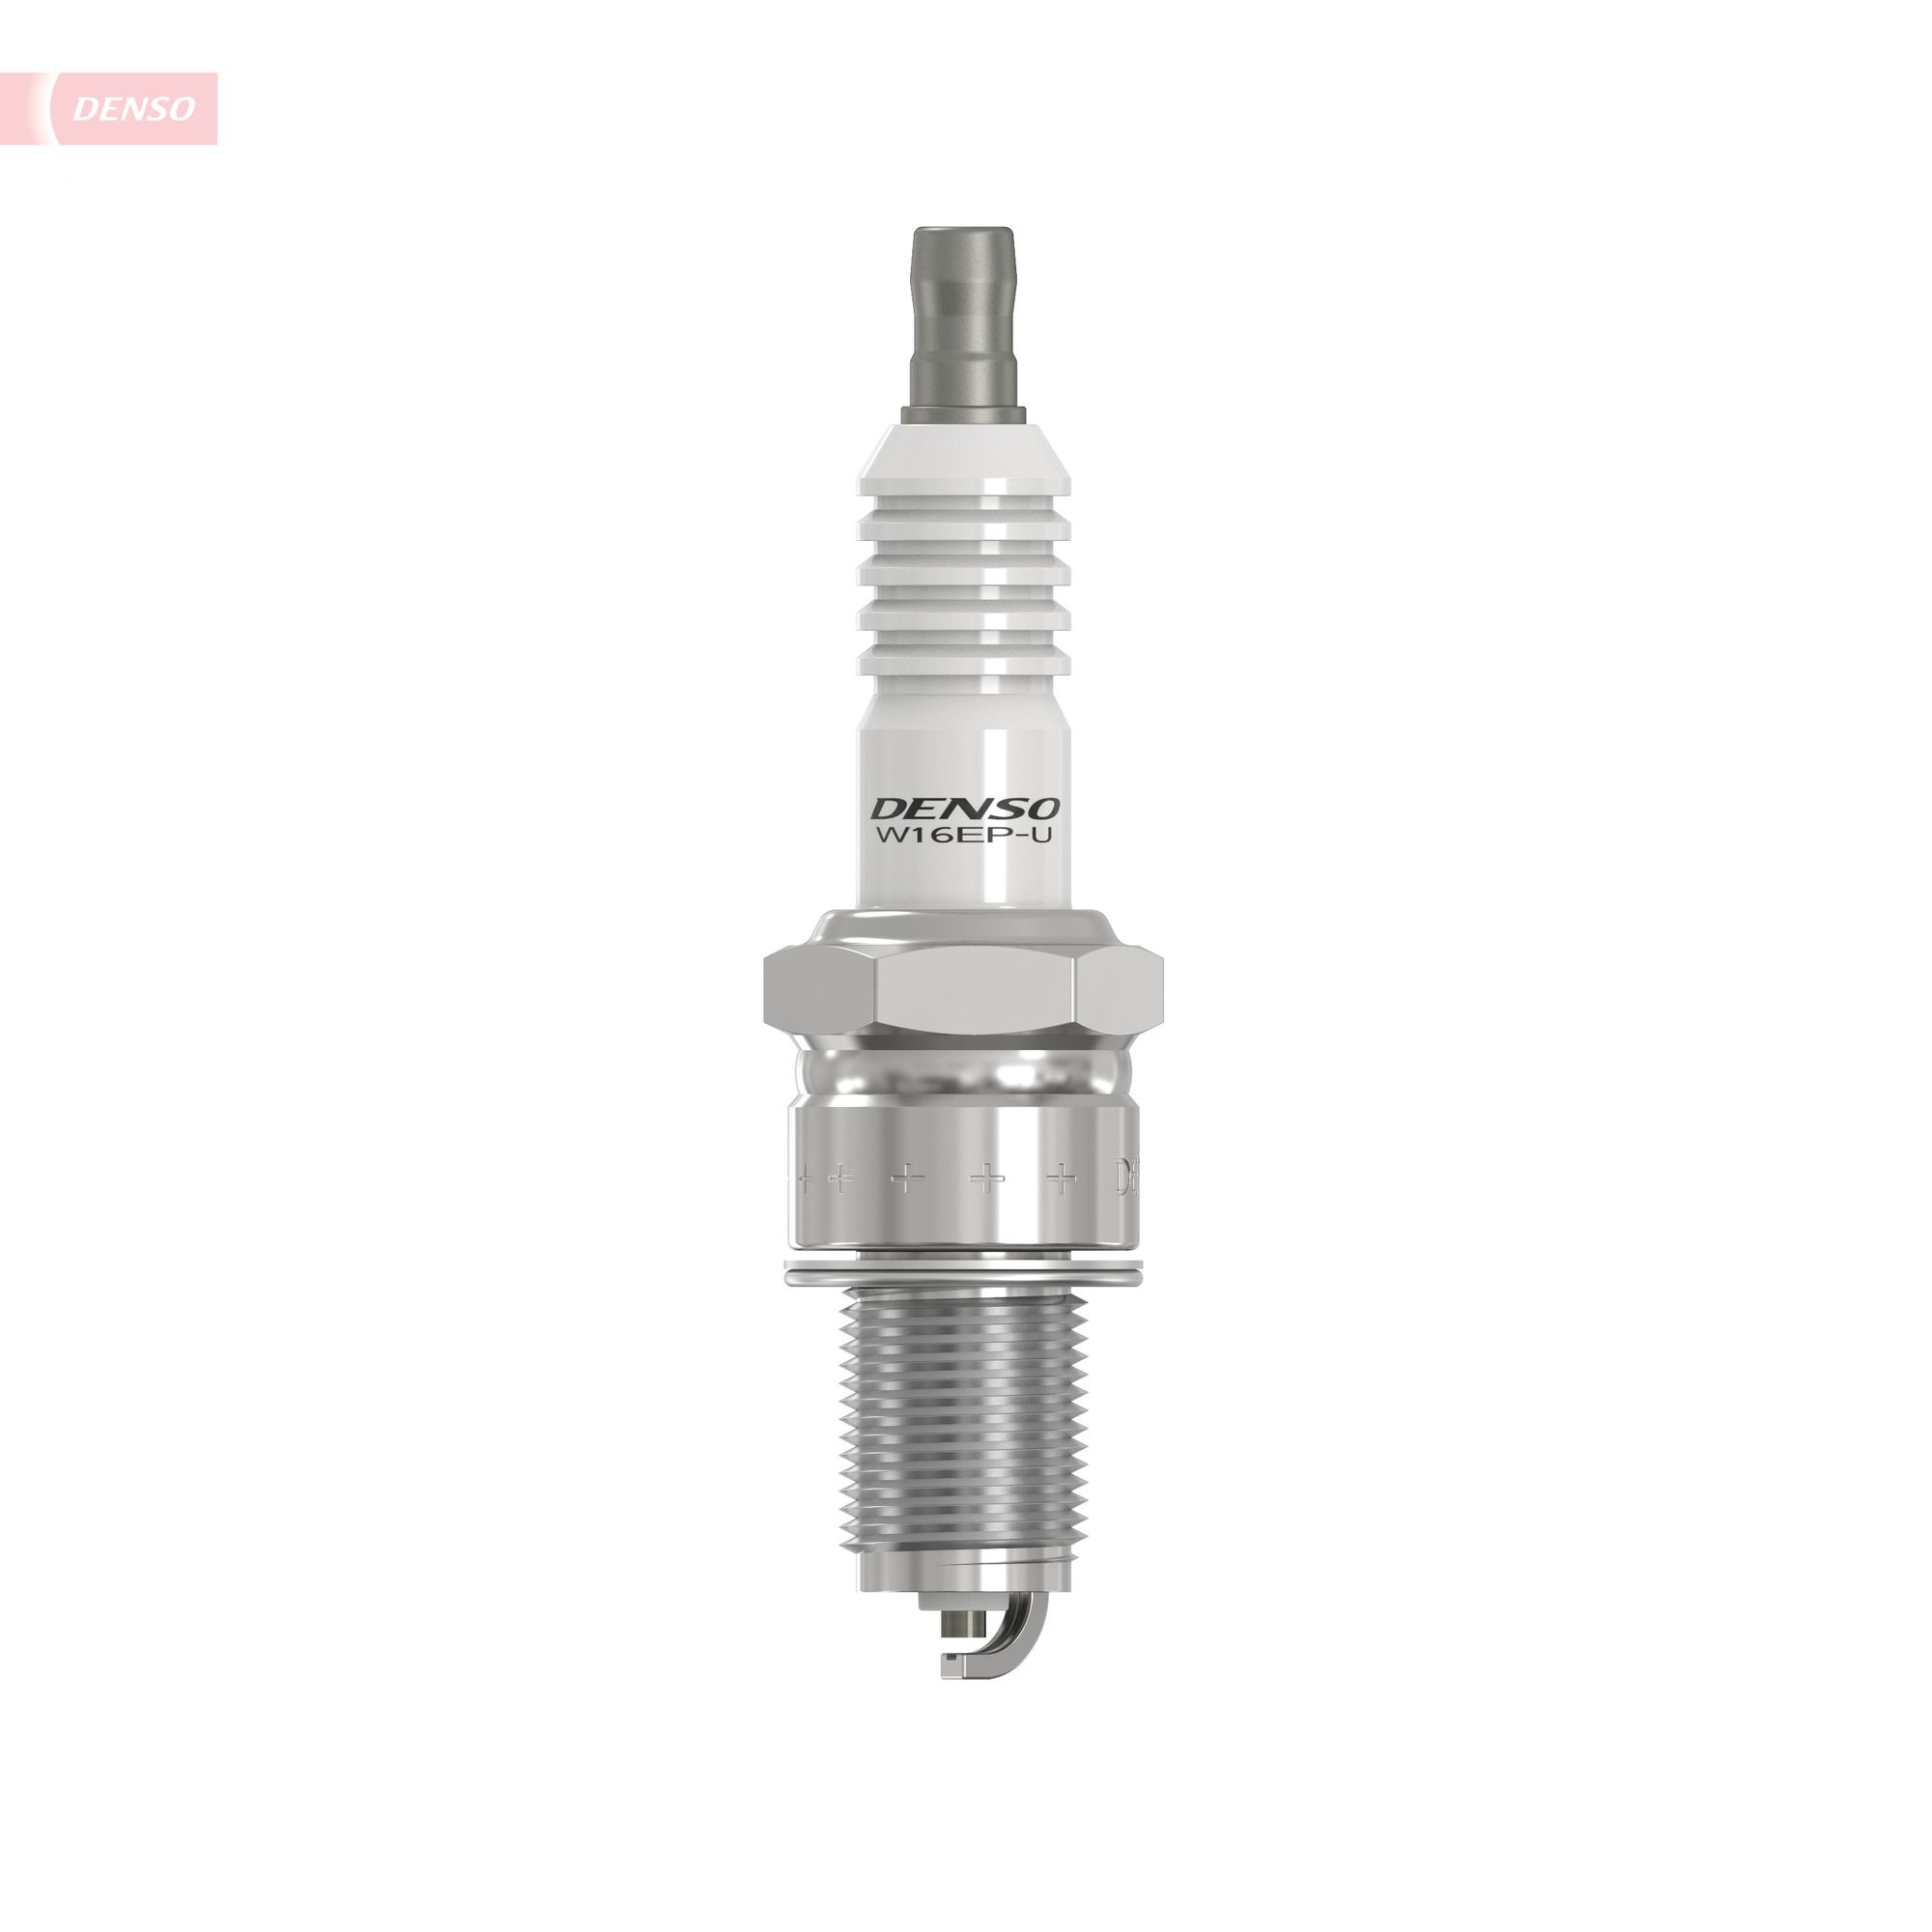 DENSO Nickel W16EP-U Spark plug Spanner Size: 20.6